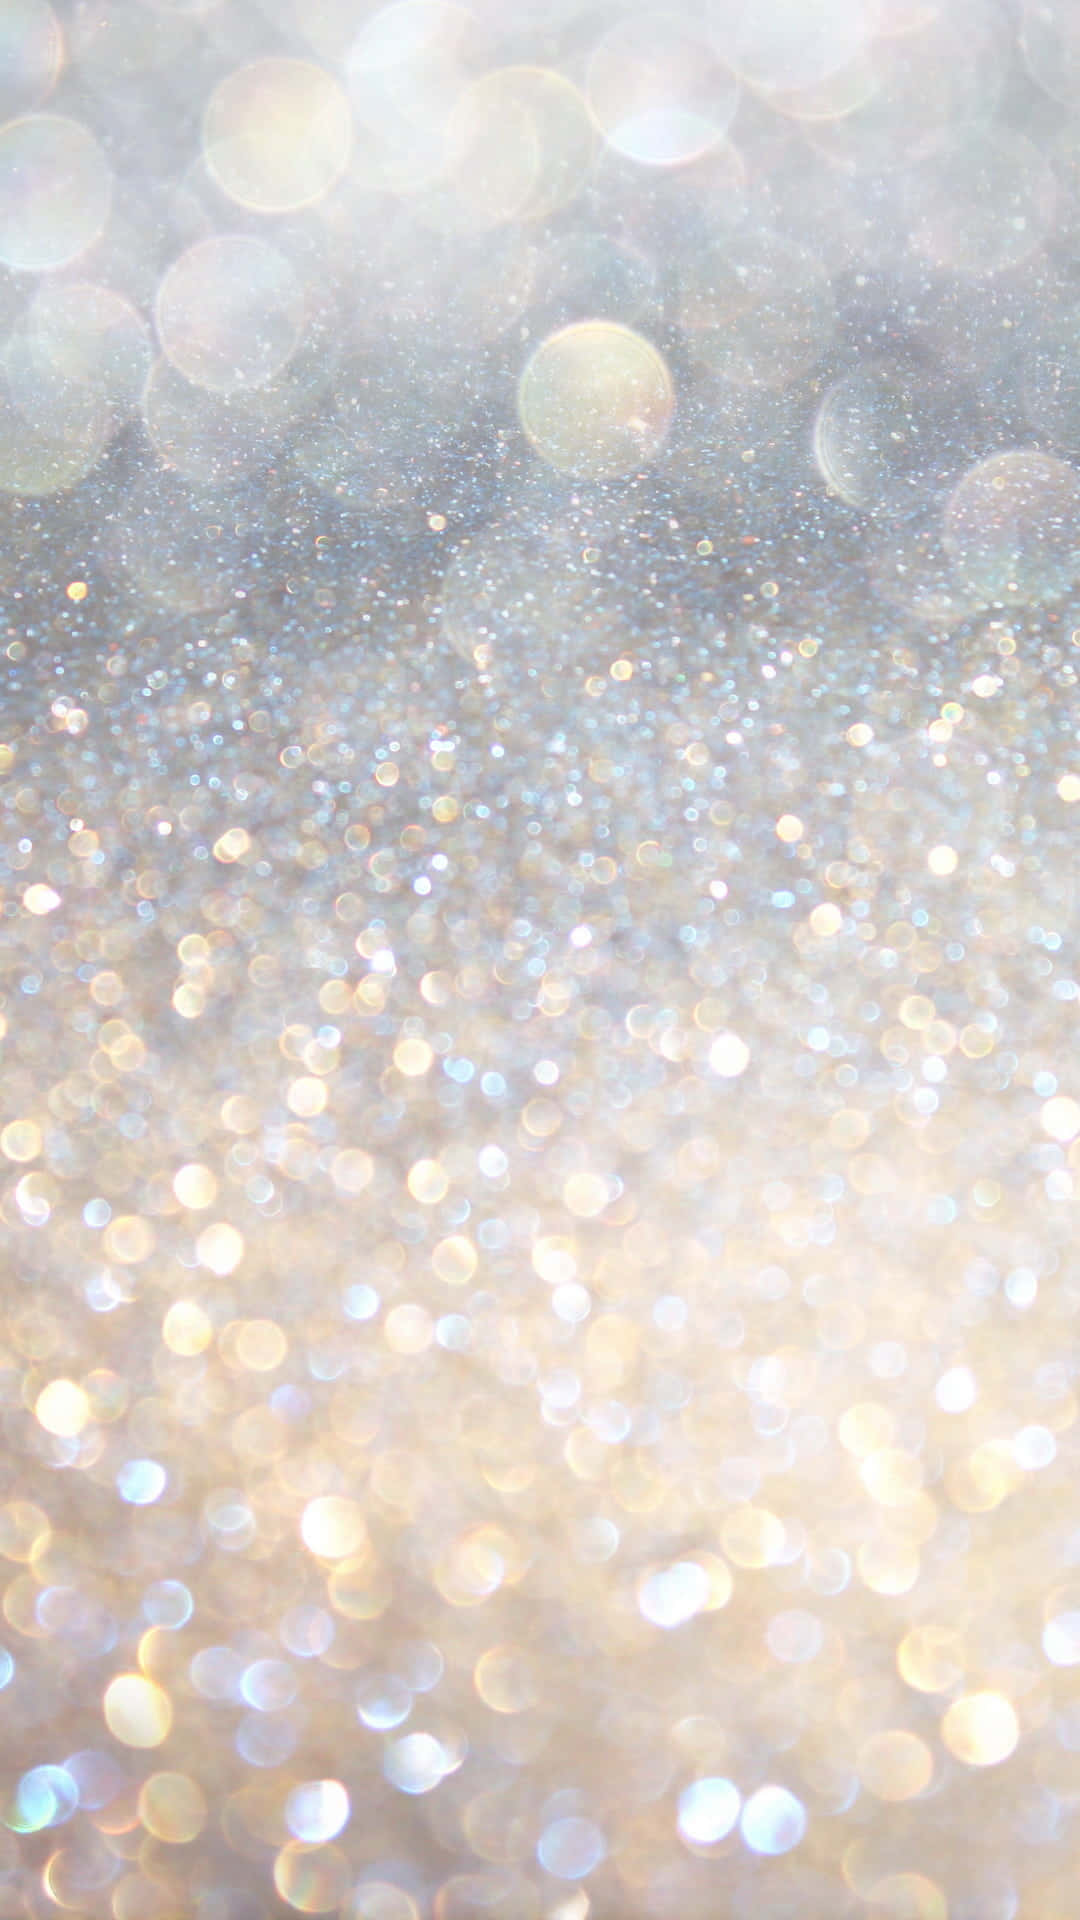 100+] Silver Glitter Backgrounds